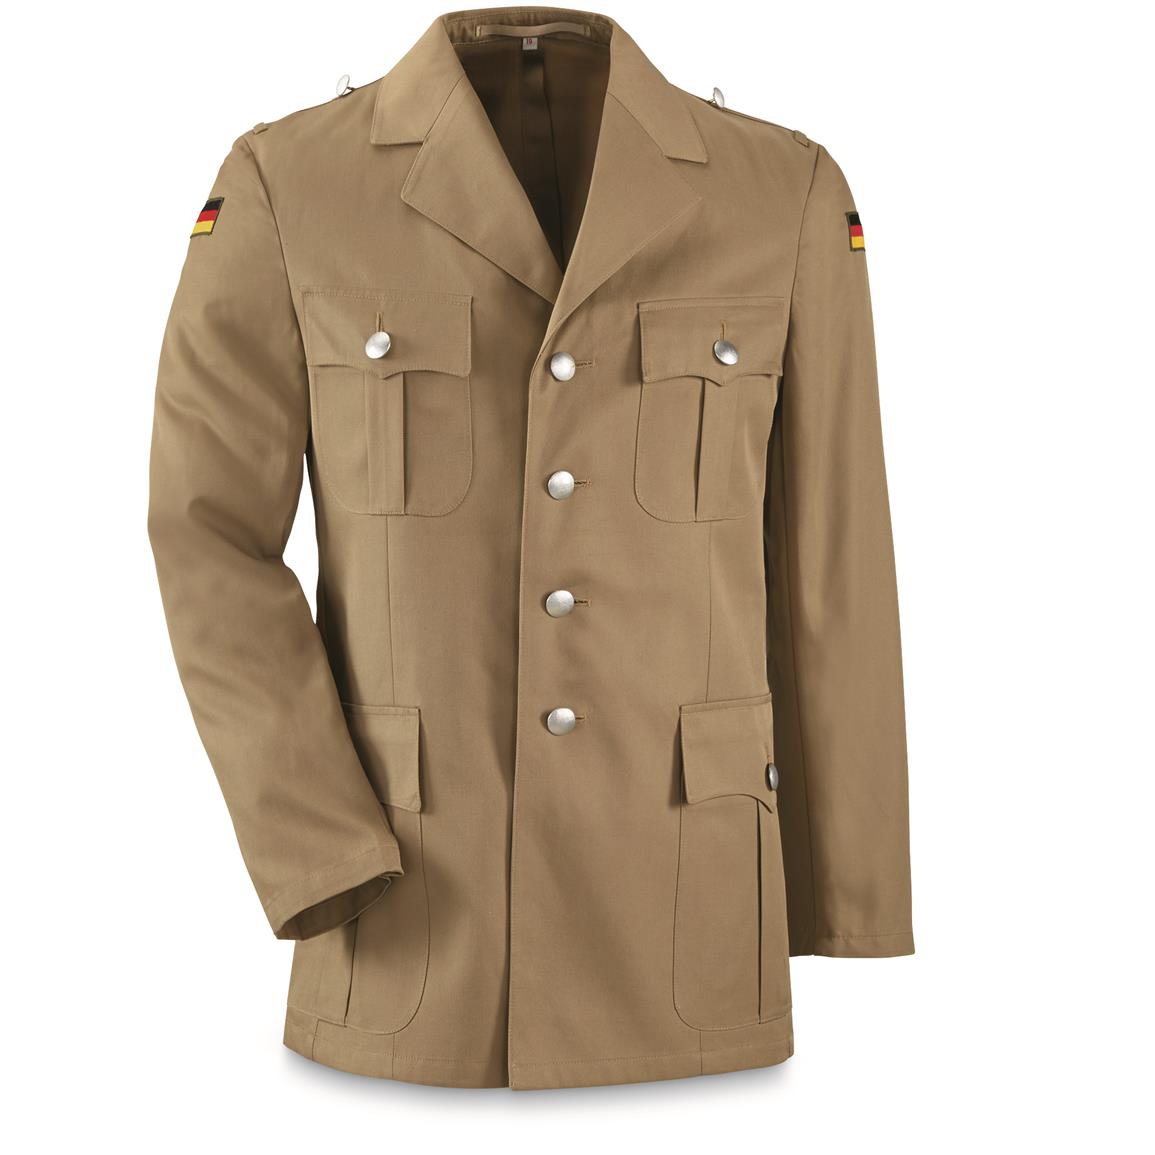 German Military Surplus Slim Fit Tropical Dress Jackets, 2 Pack, Like New